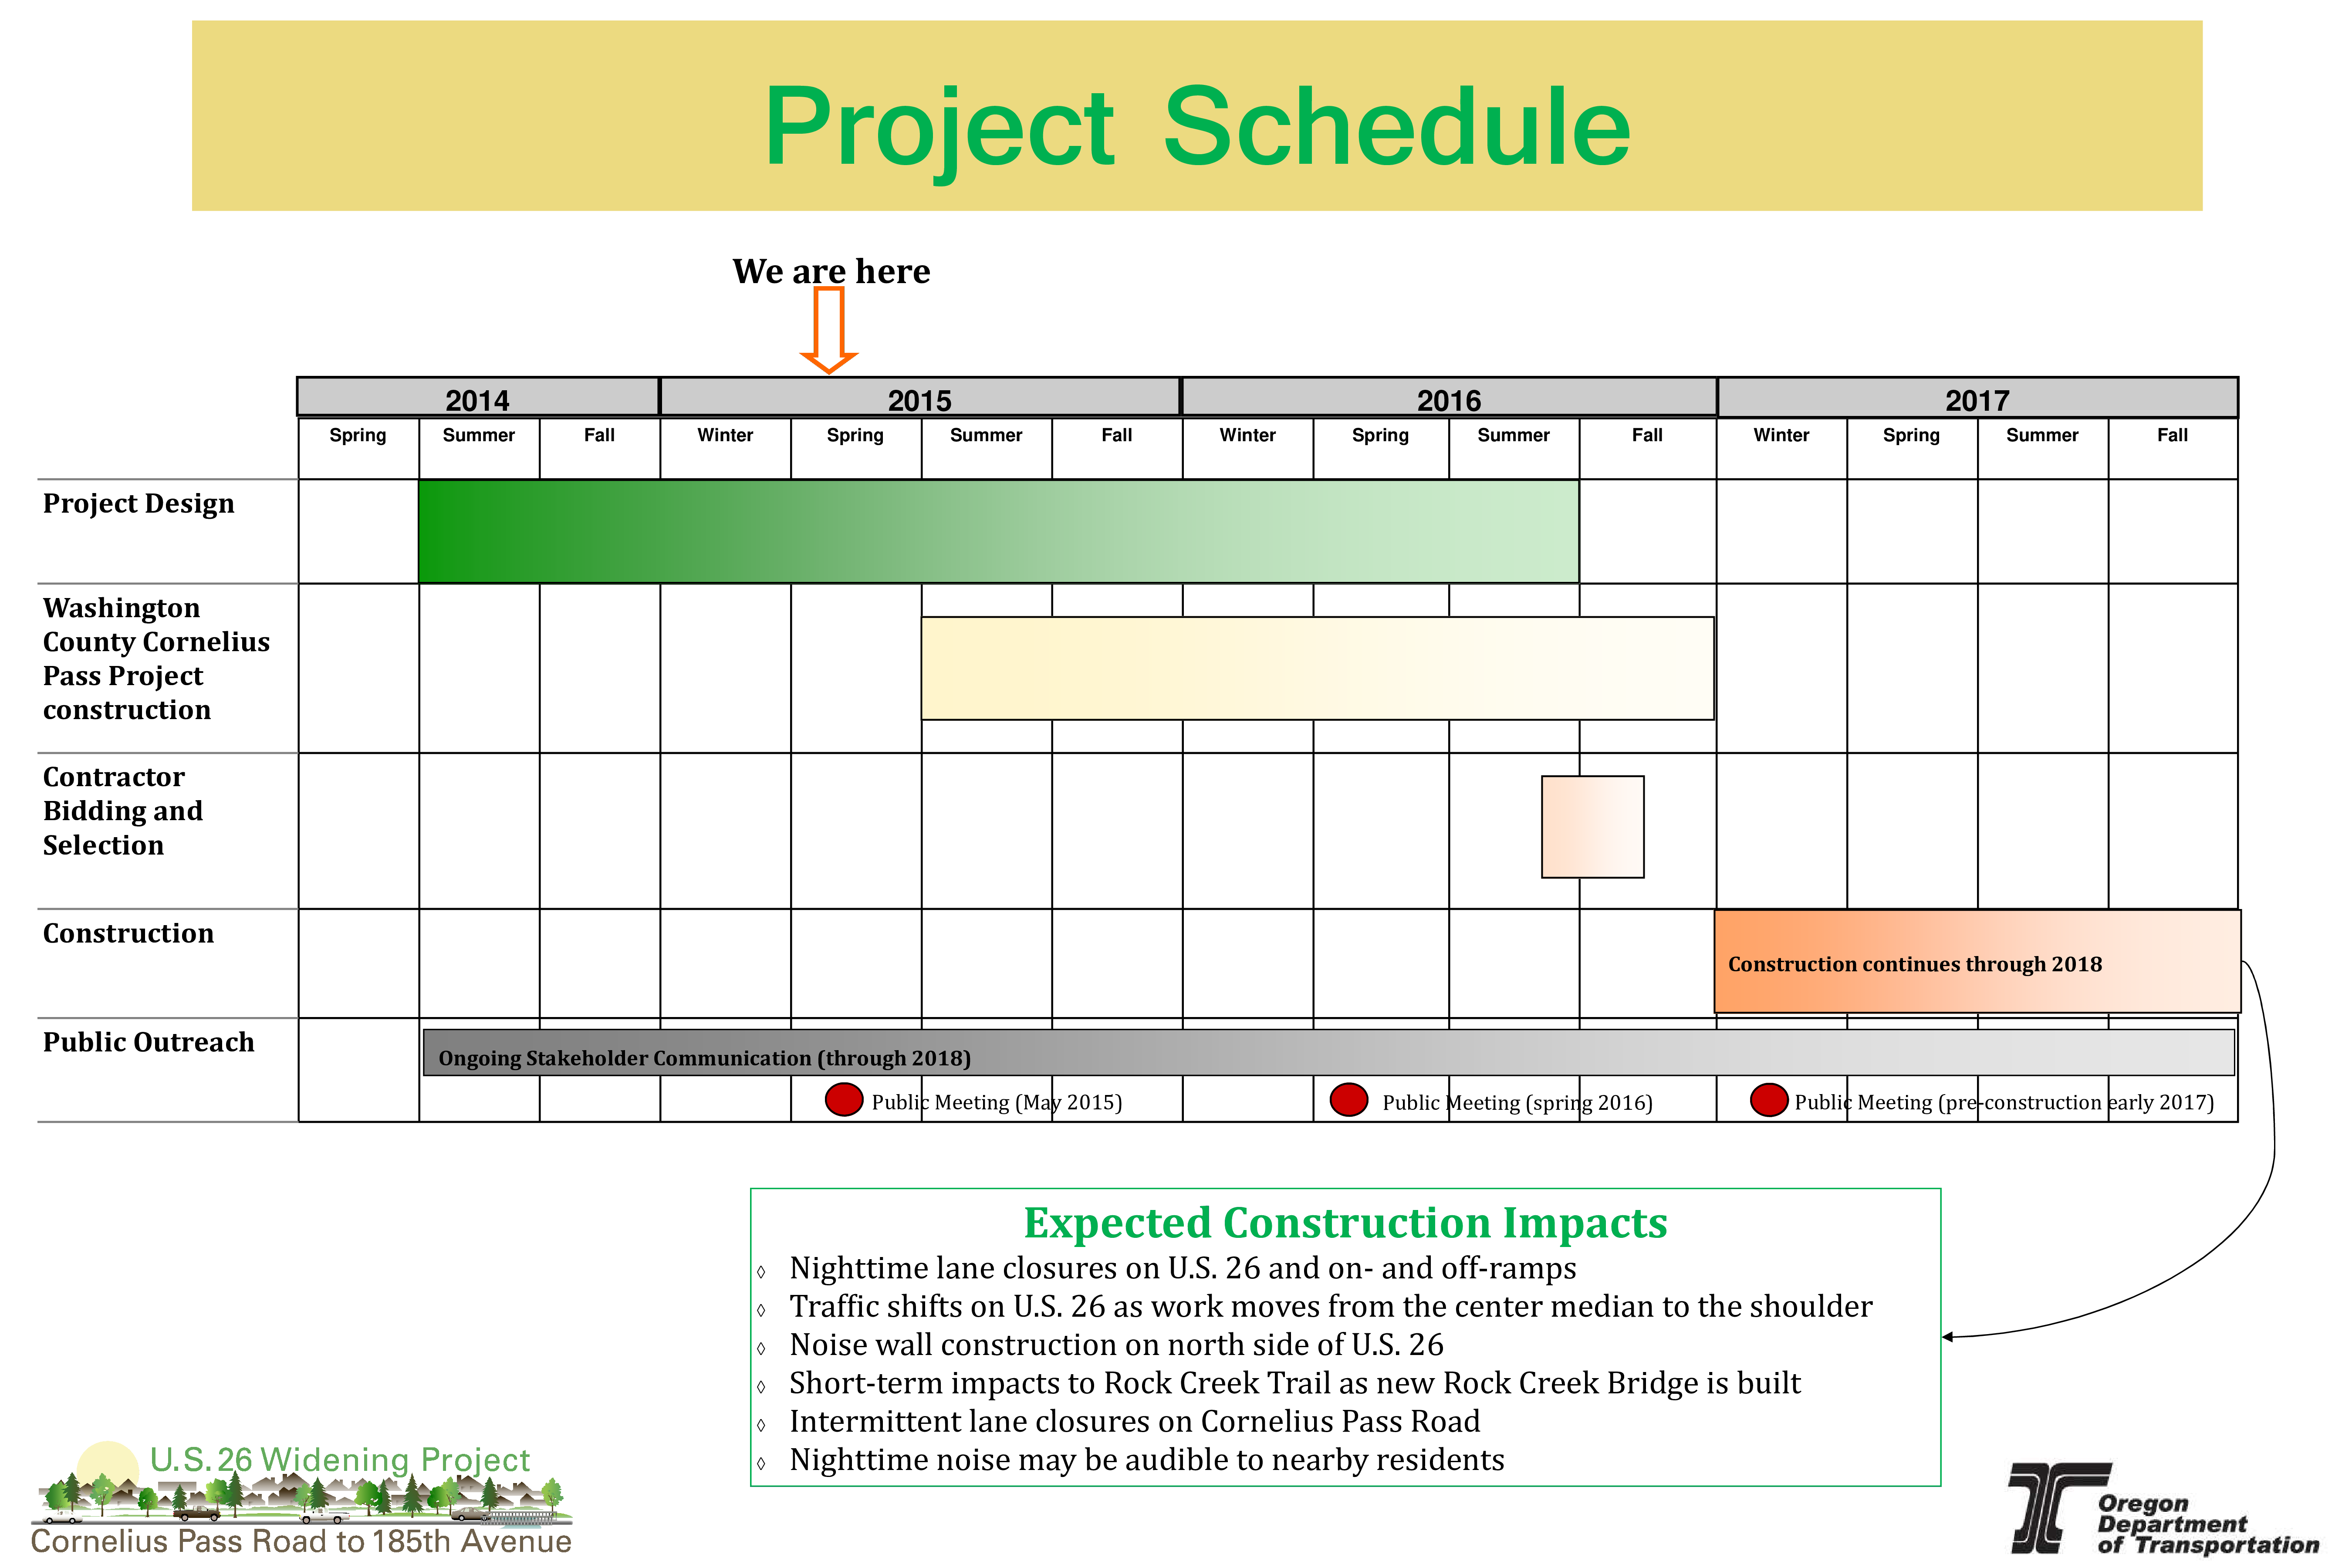 excel project schedule planner